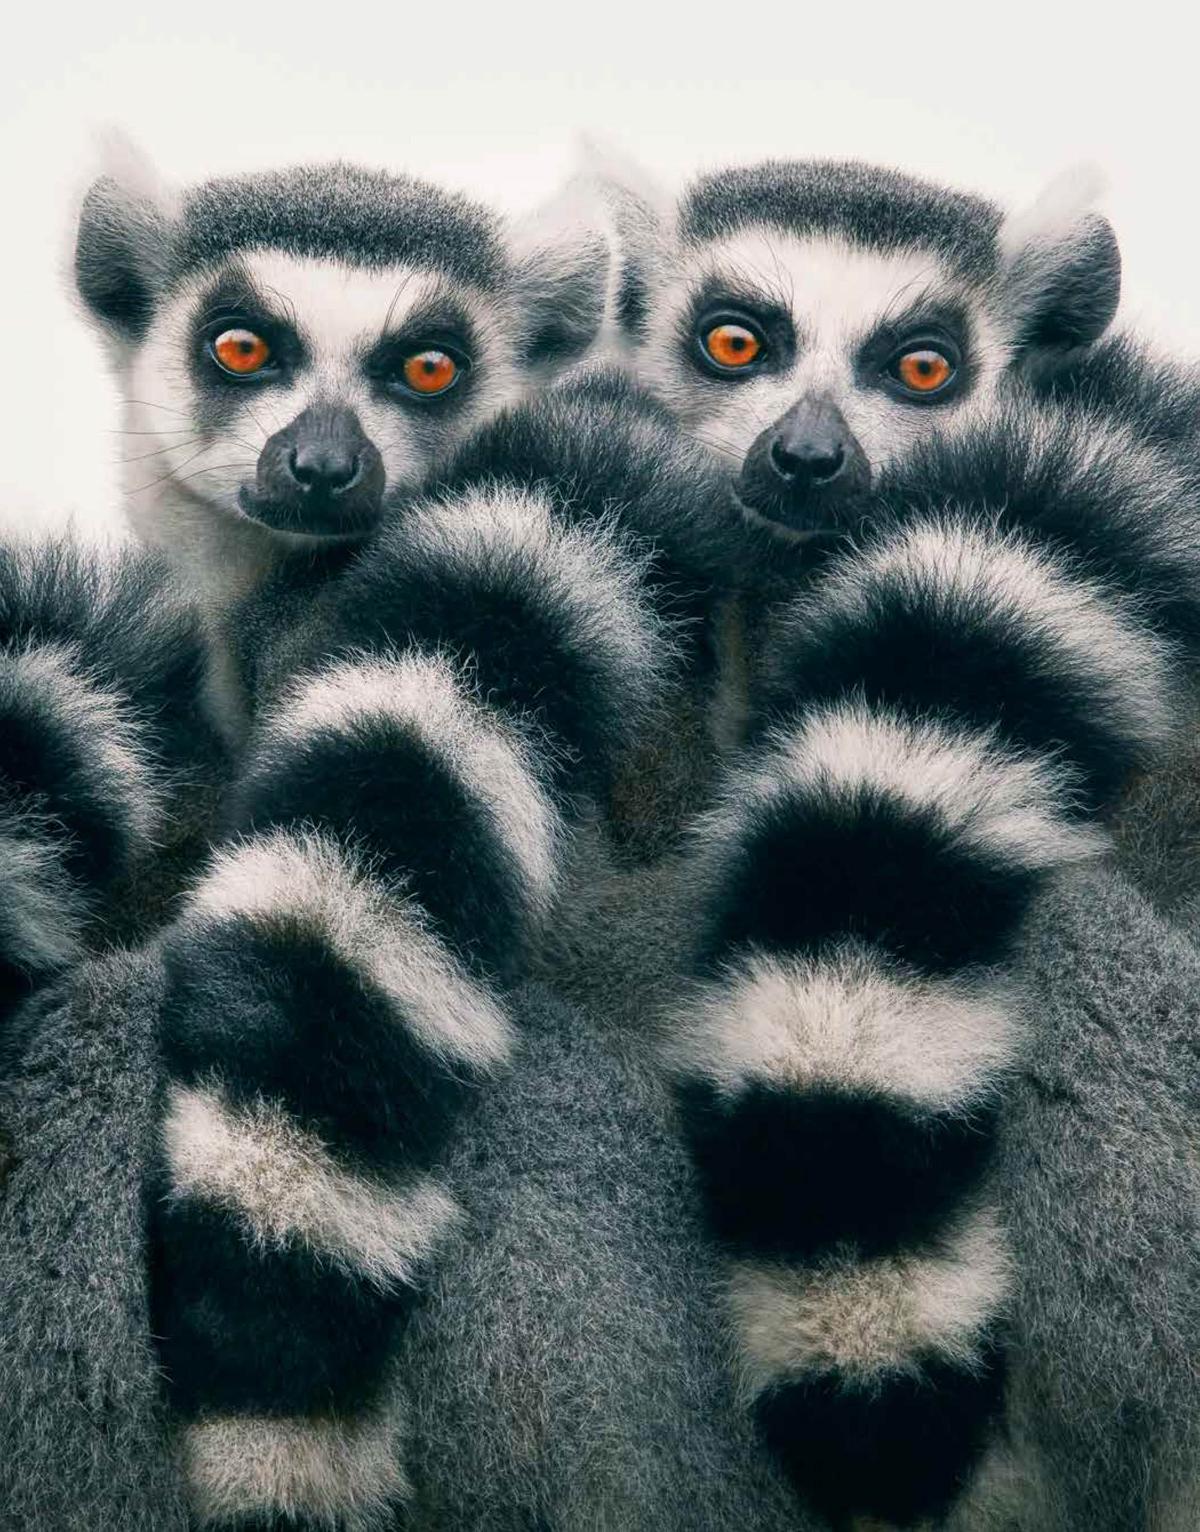 A pair of ring-tailed lemurs. (Courtesy of <a href="https://timflach.com/">Tim Flach</a>)